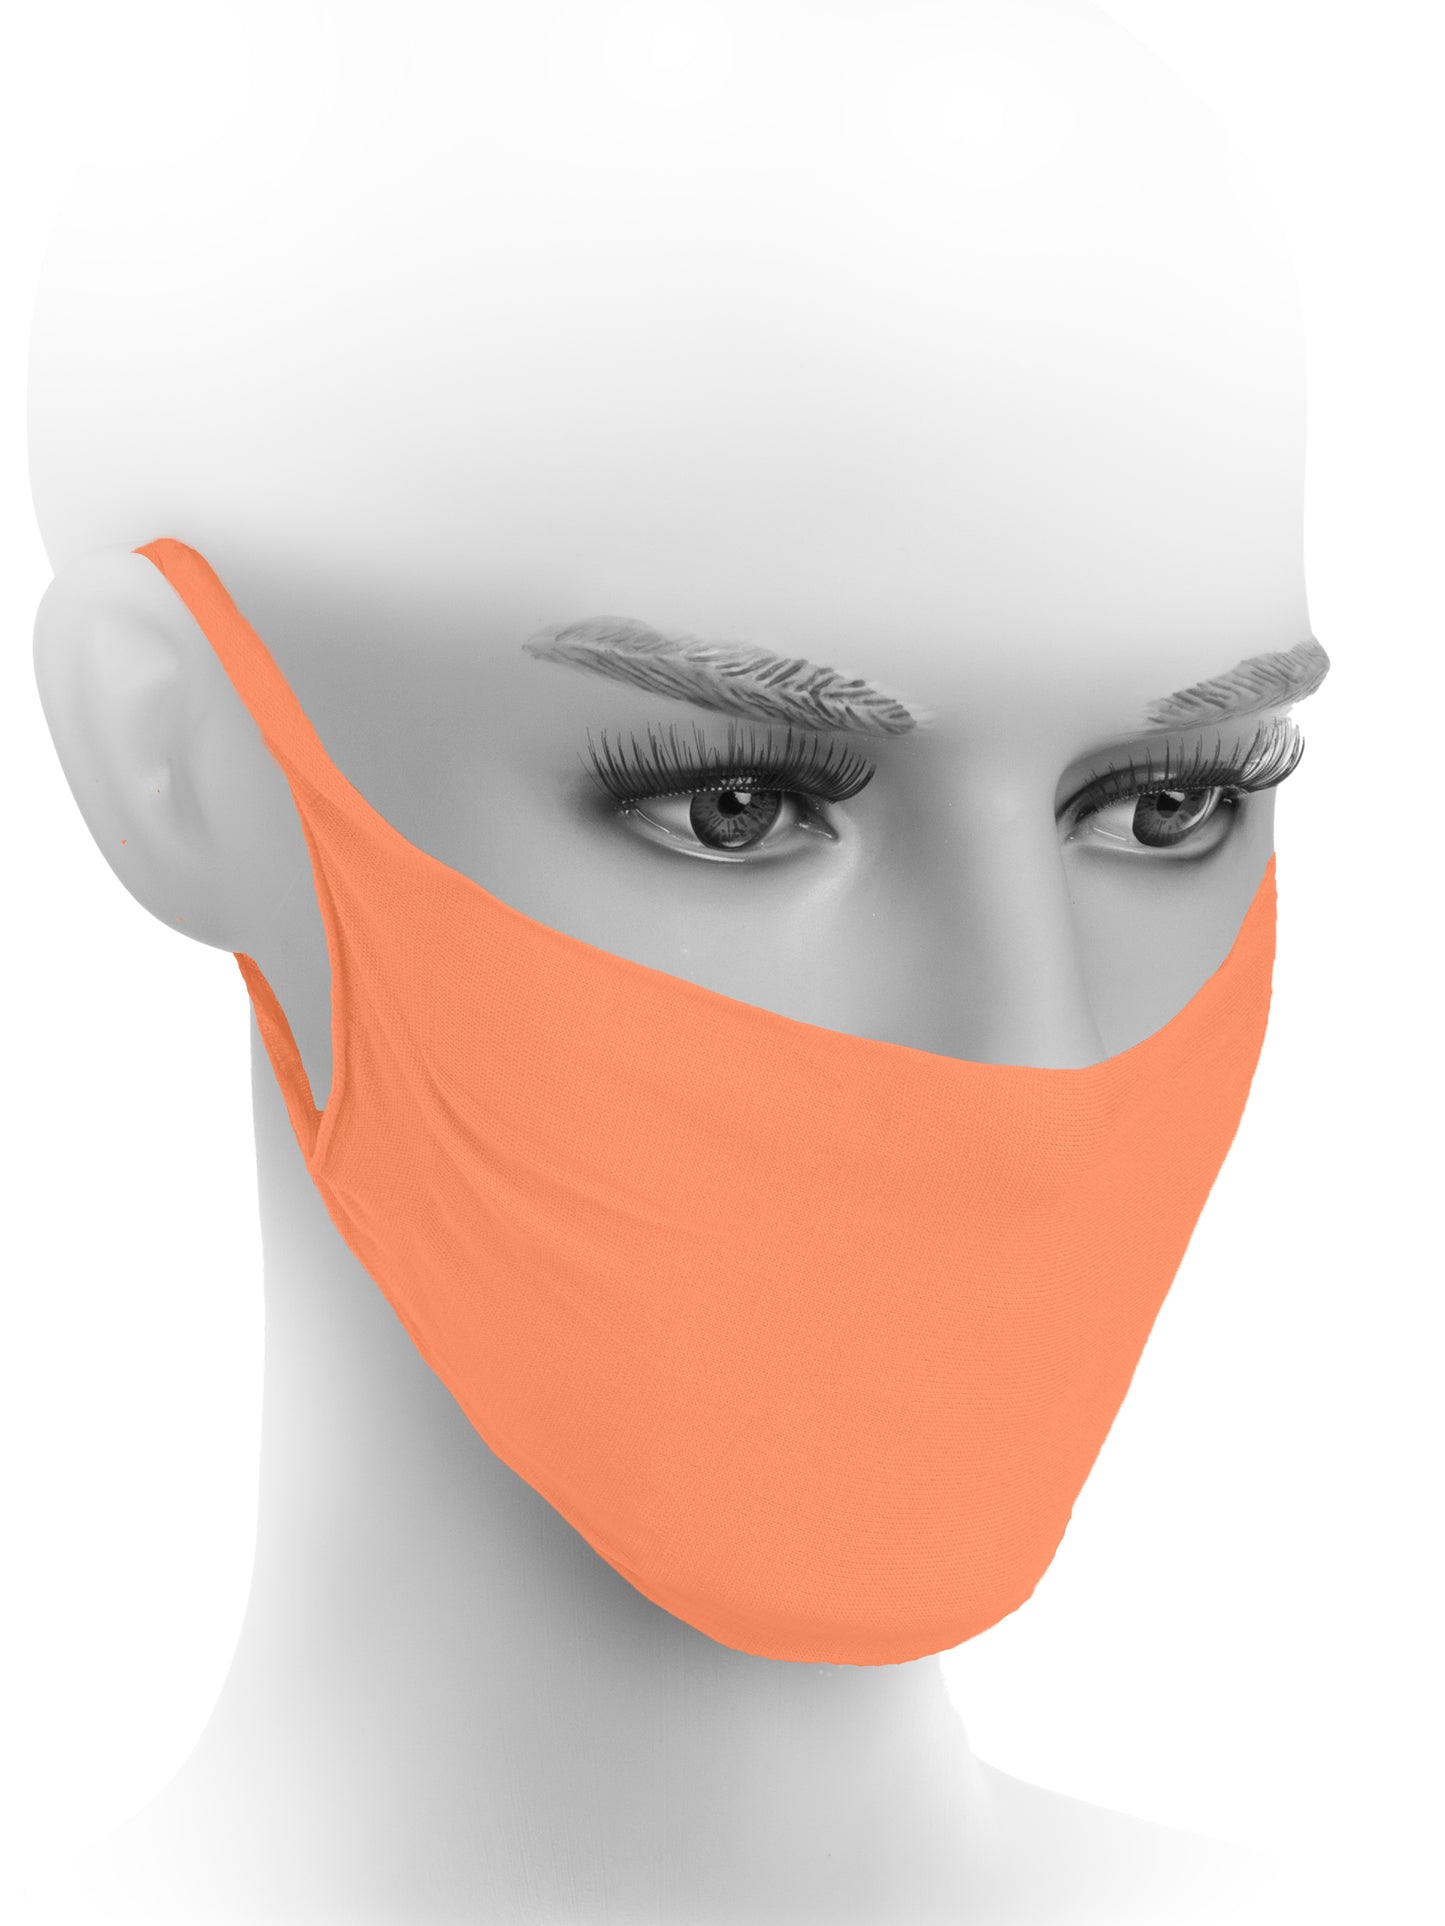 Fiore Hygiene Face Mask M0001 - face covering in bright neon orange